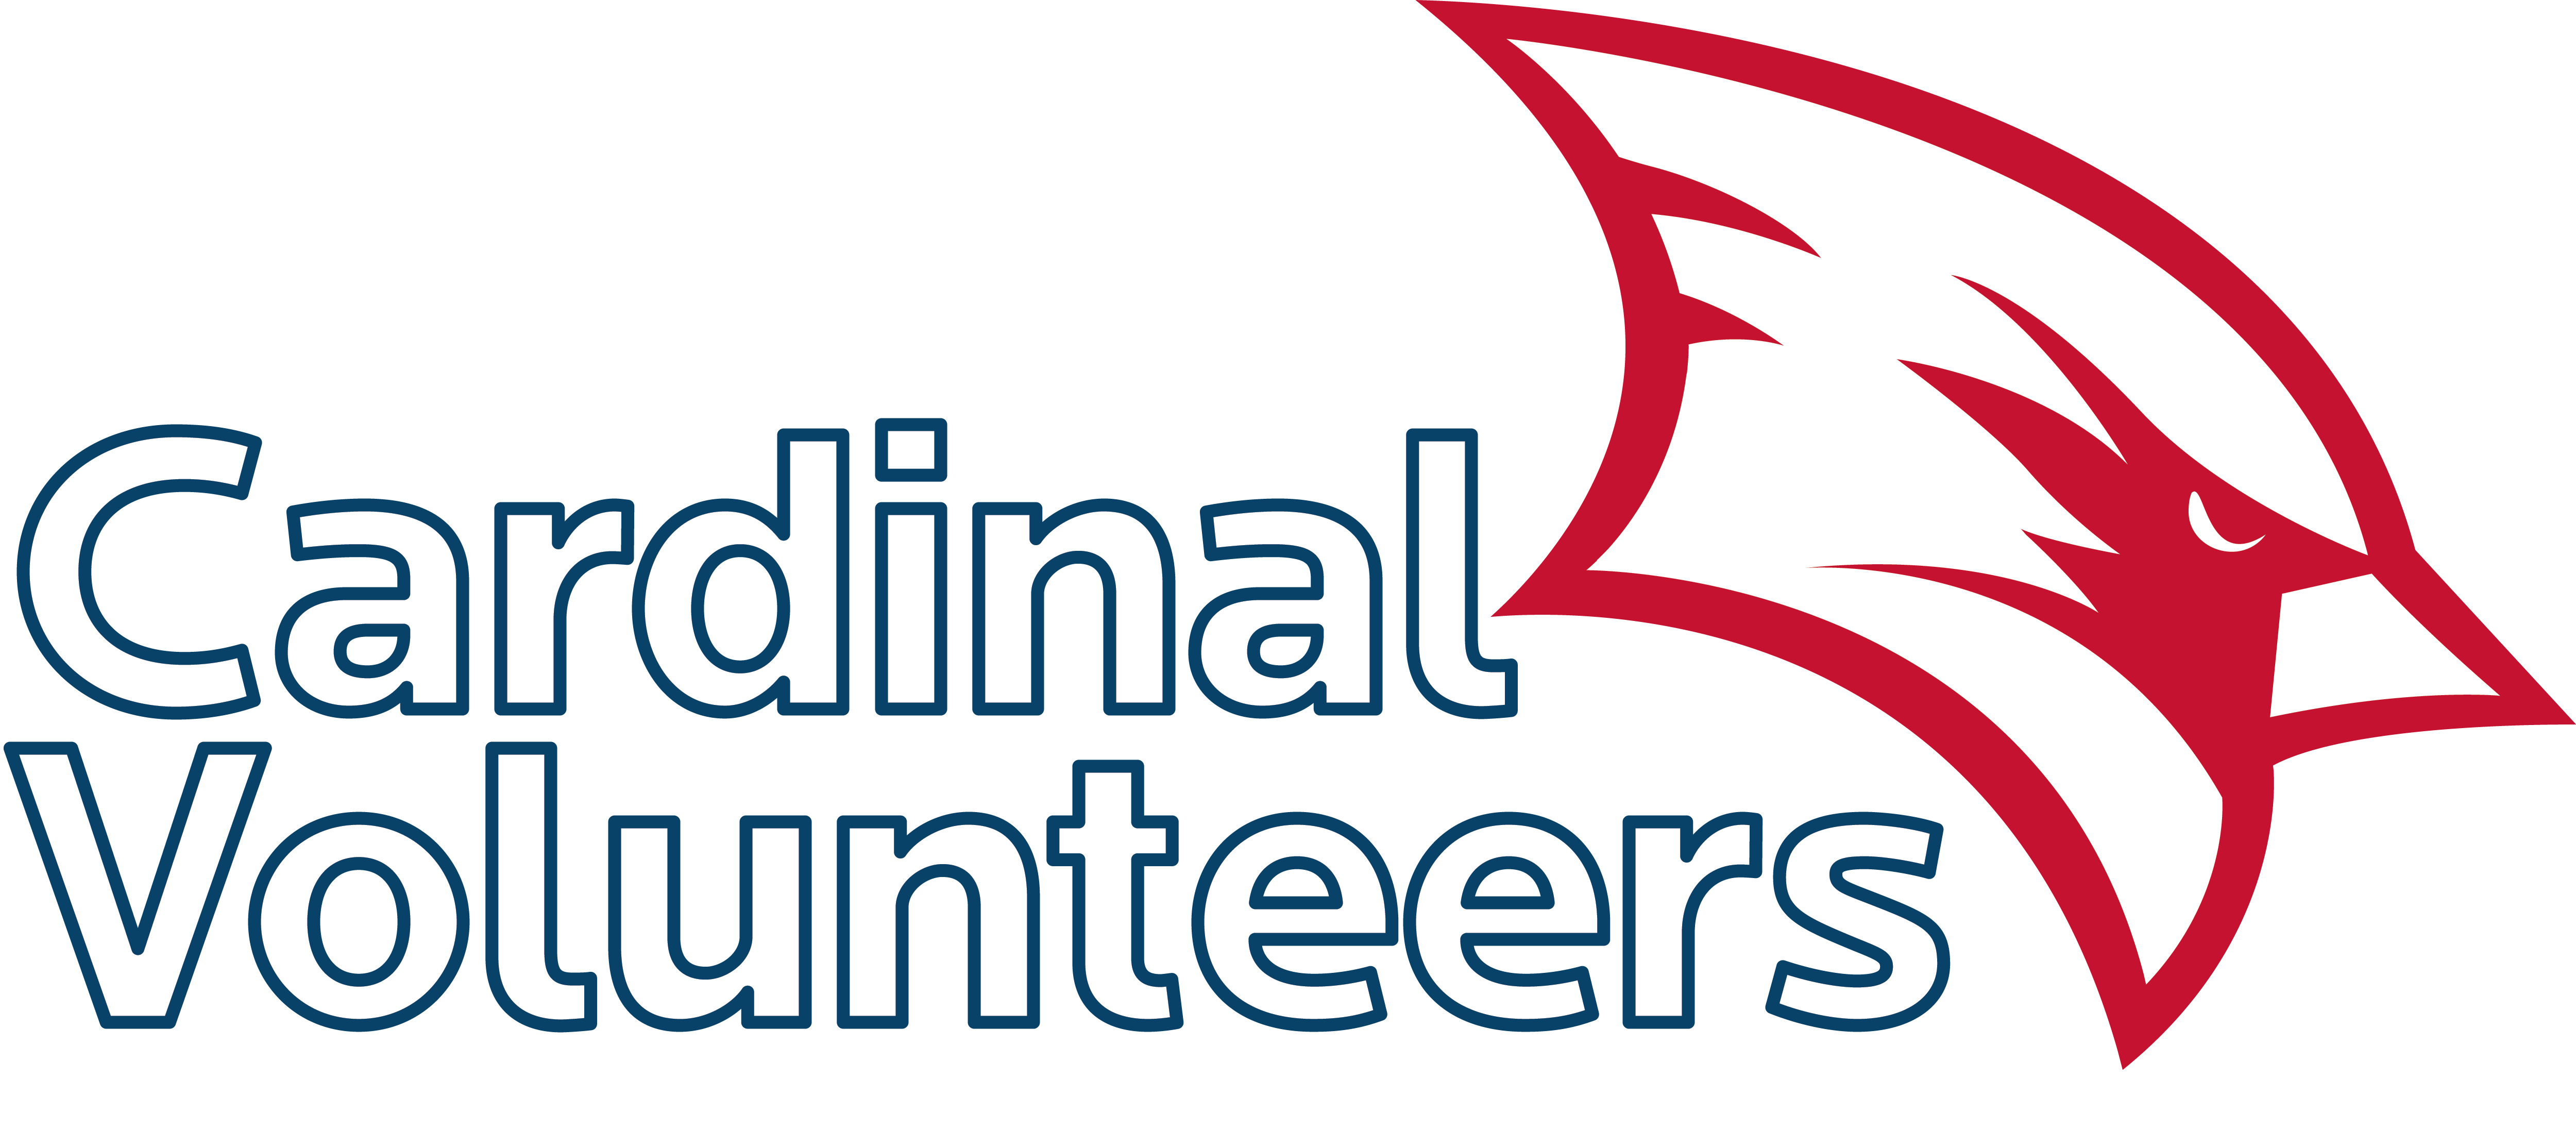 Cardinal Volunteers Logo